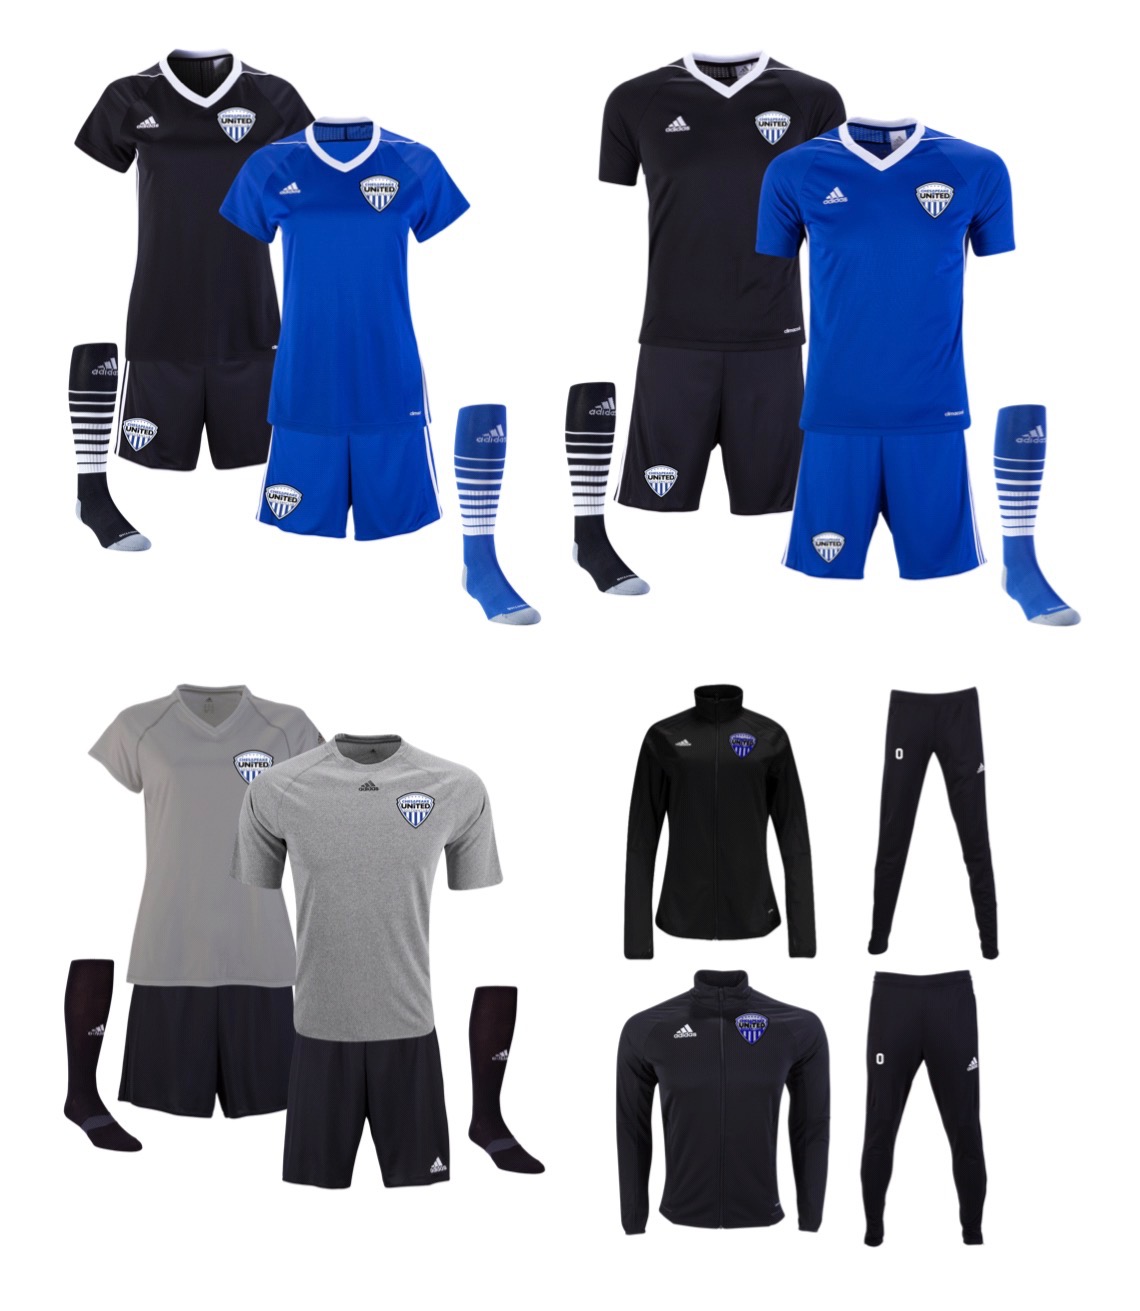 CUSC Club Store/Uniforms • Chesapeake United Soccer Club